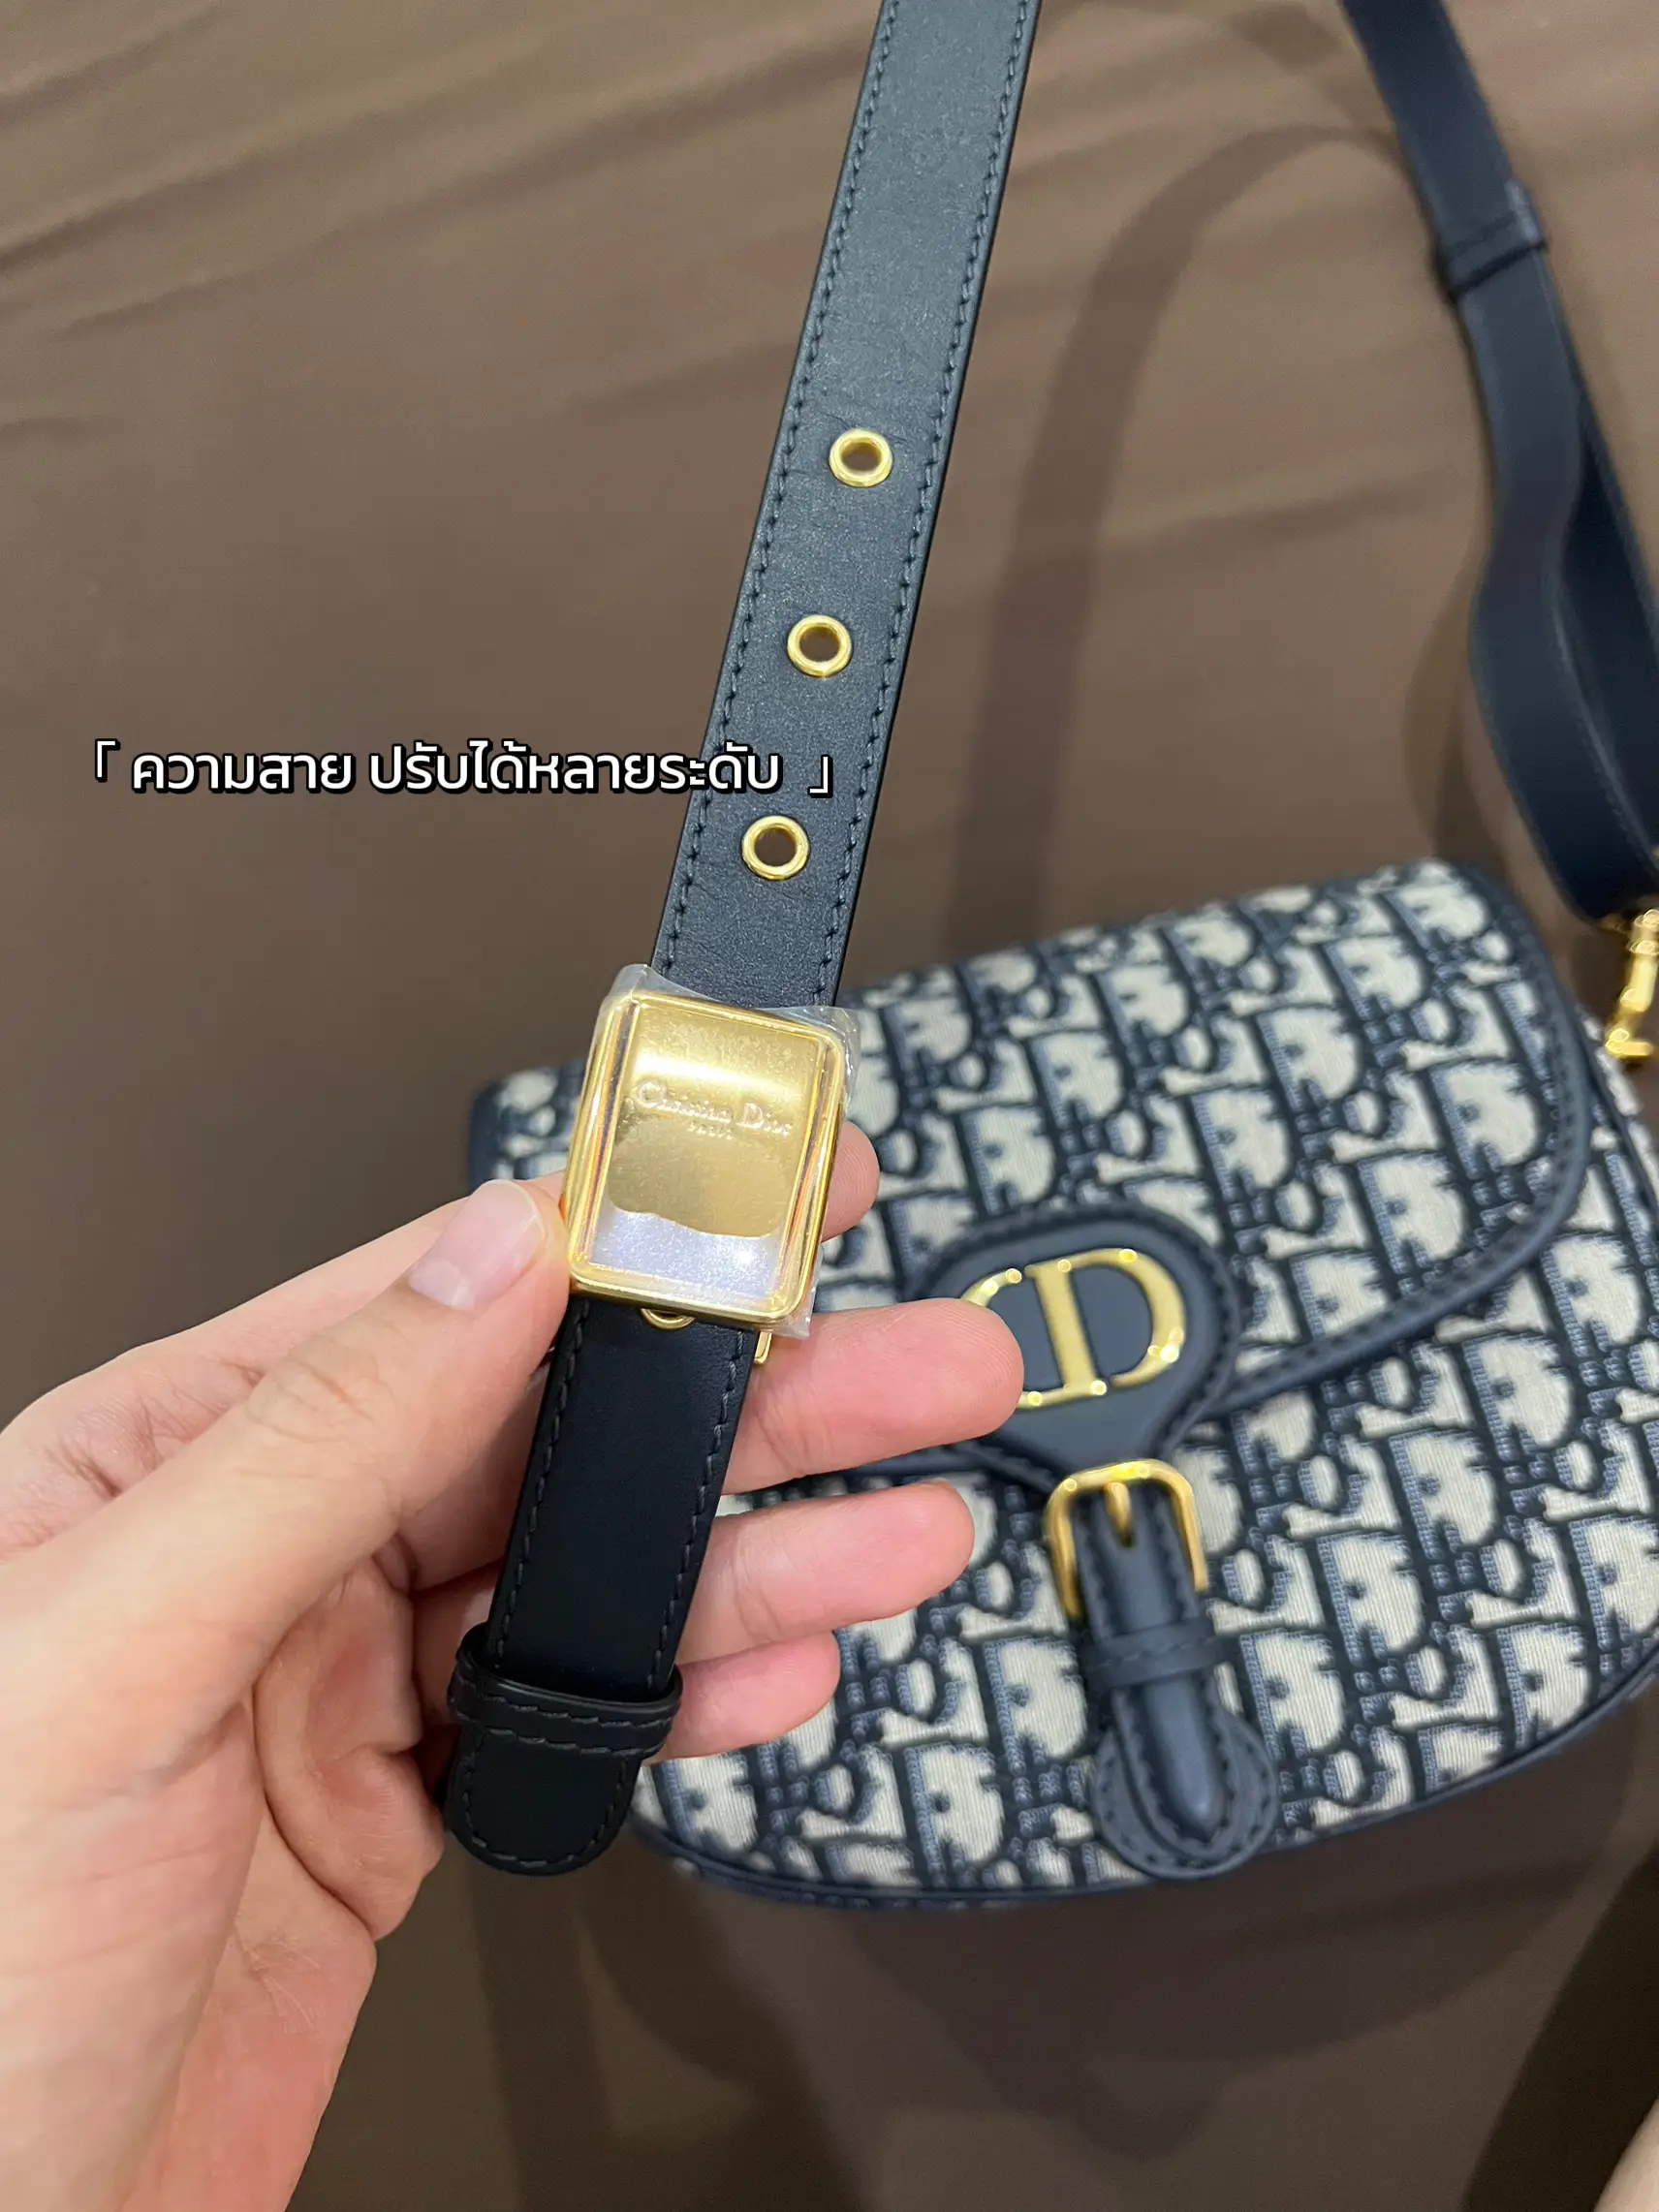 Bag Talk: Dior Bobby